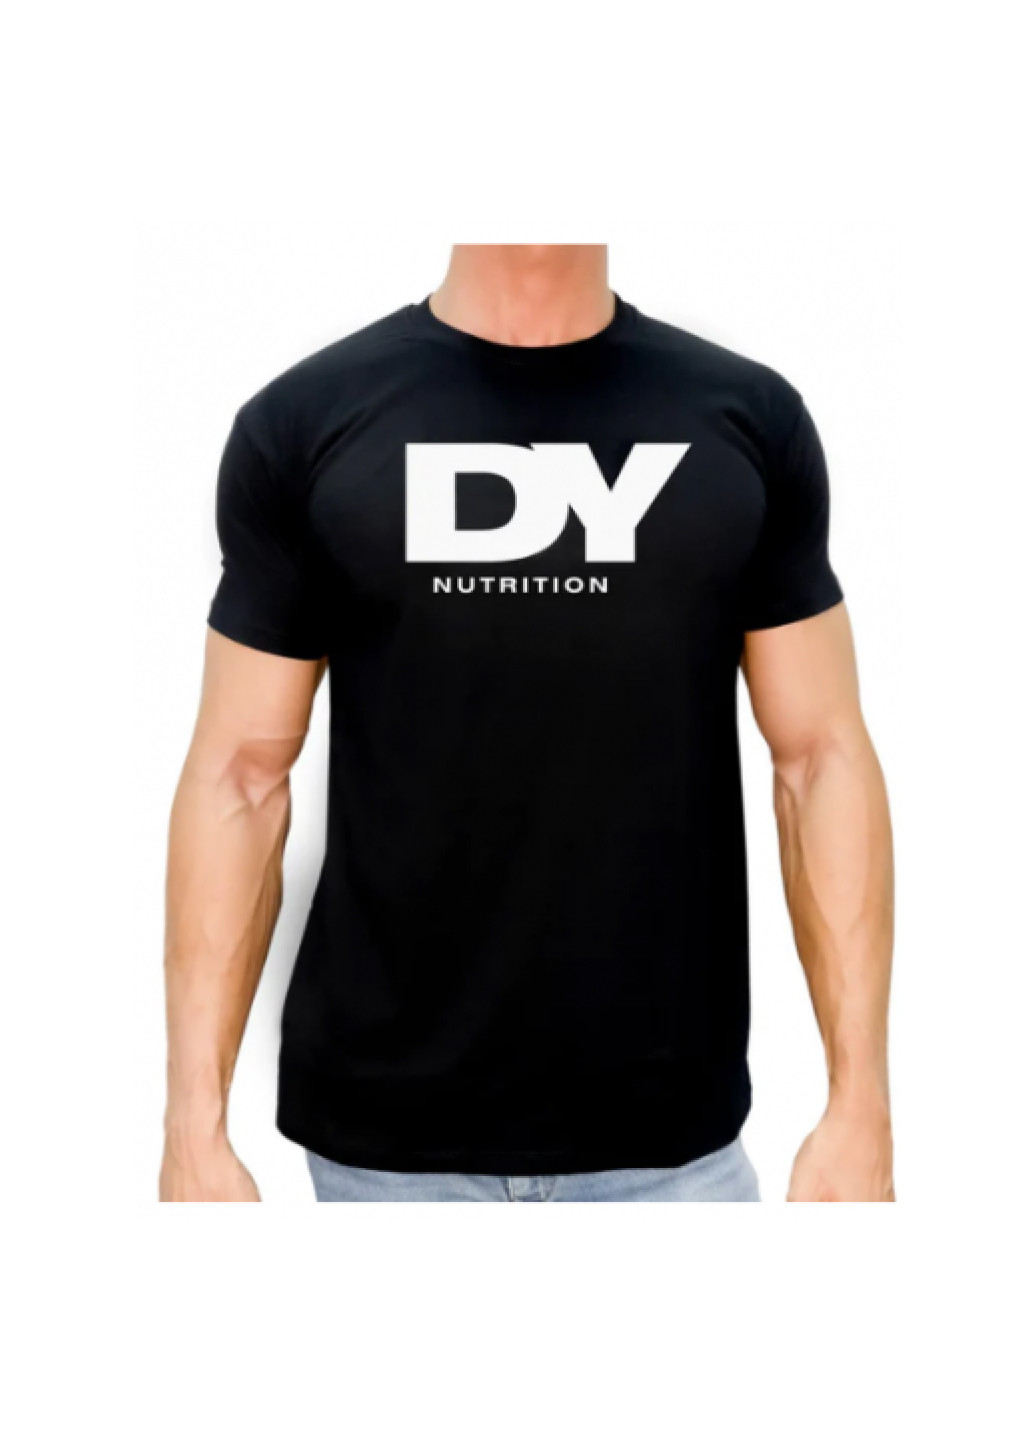 Черная футболка мужская xl t-shirt malfini blakc -xl DY Nutrition